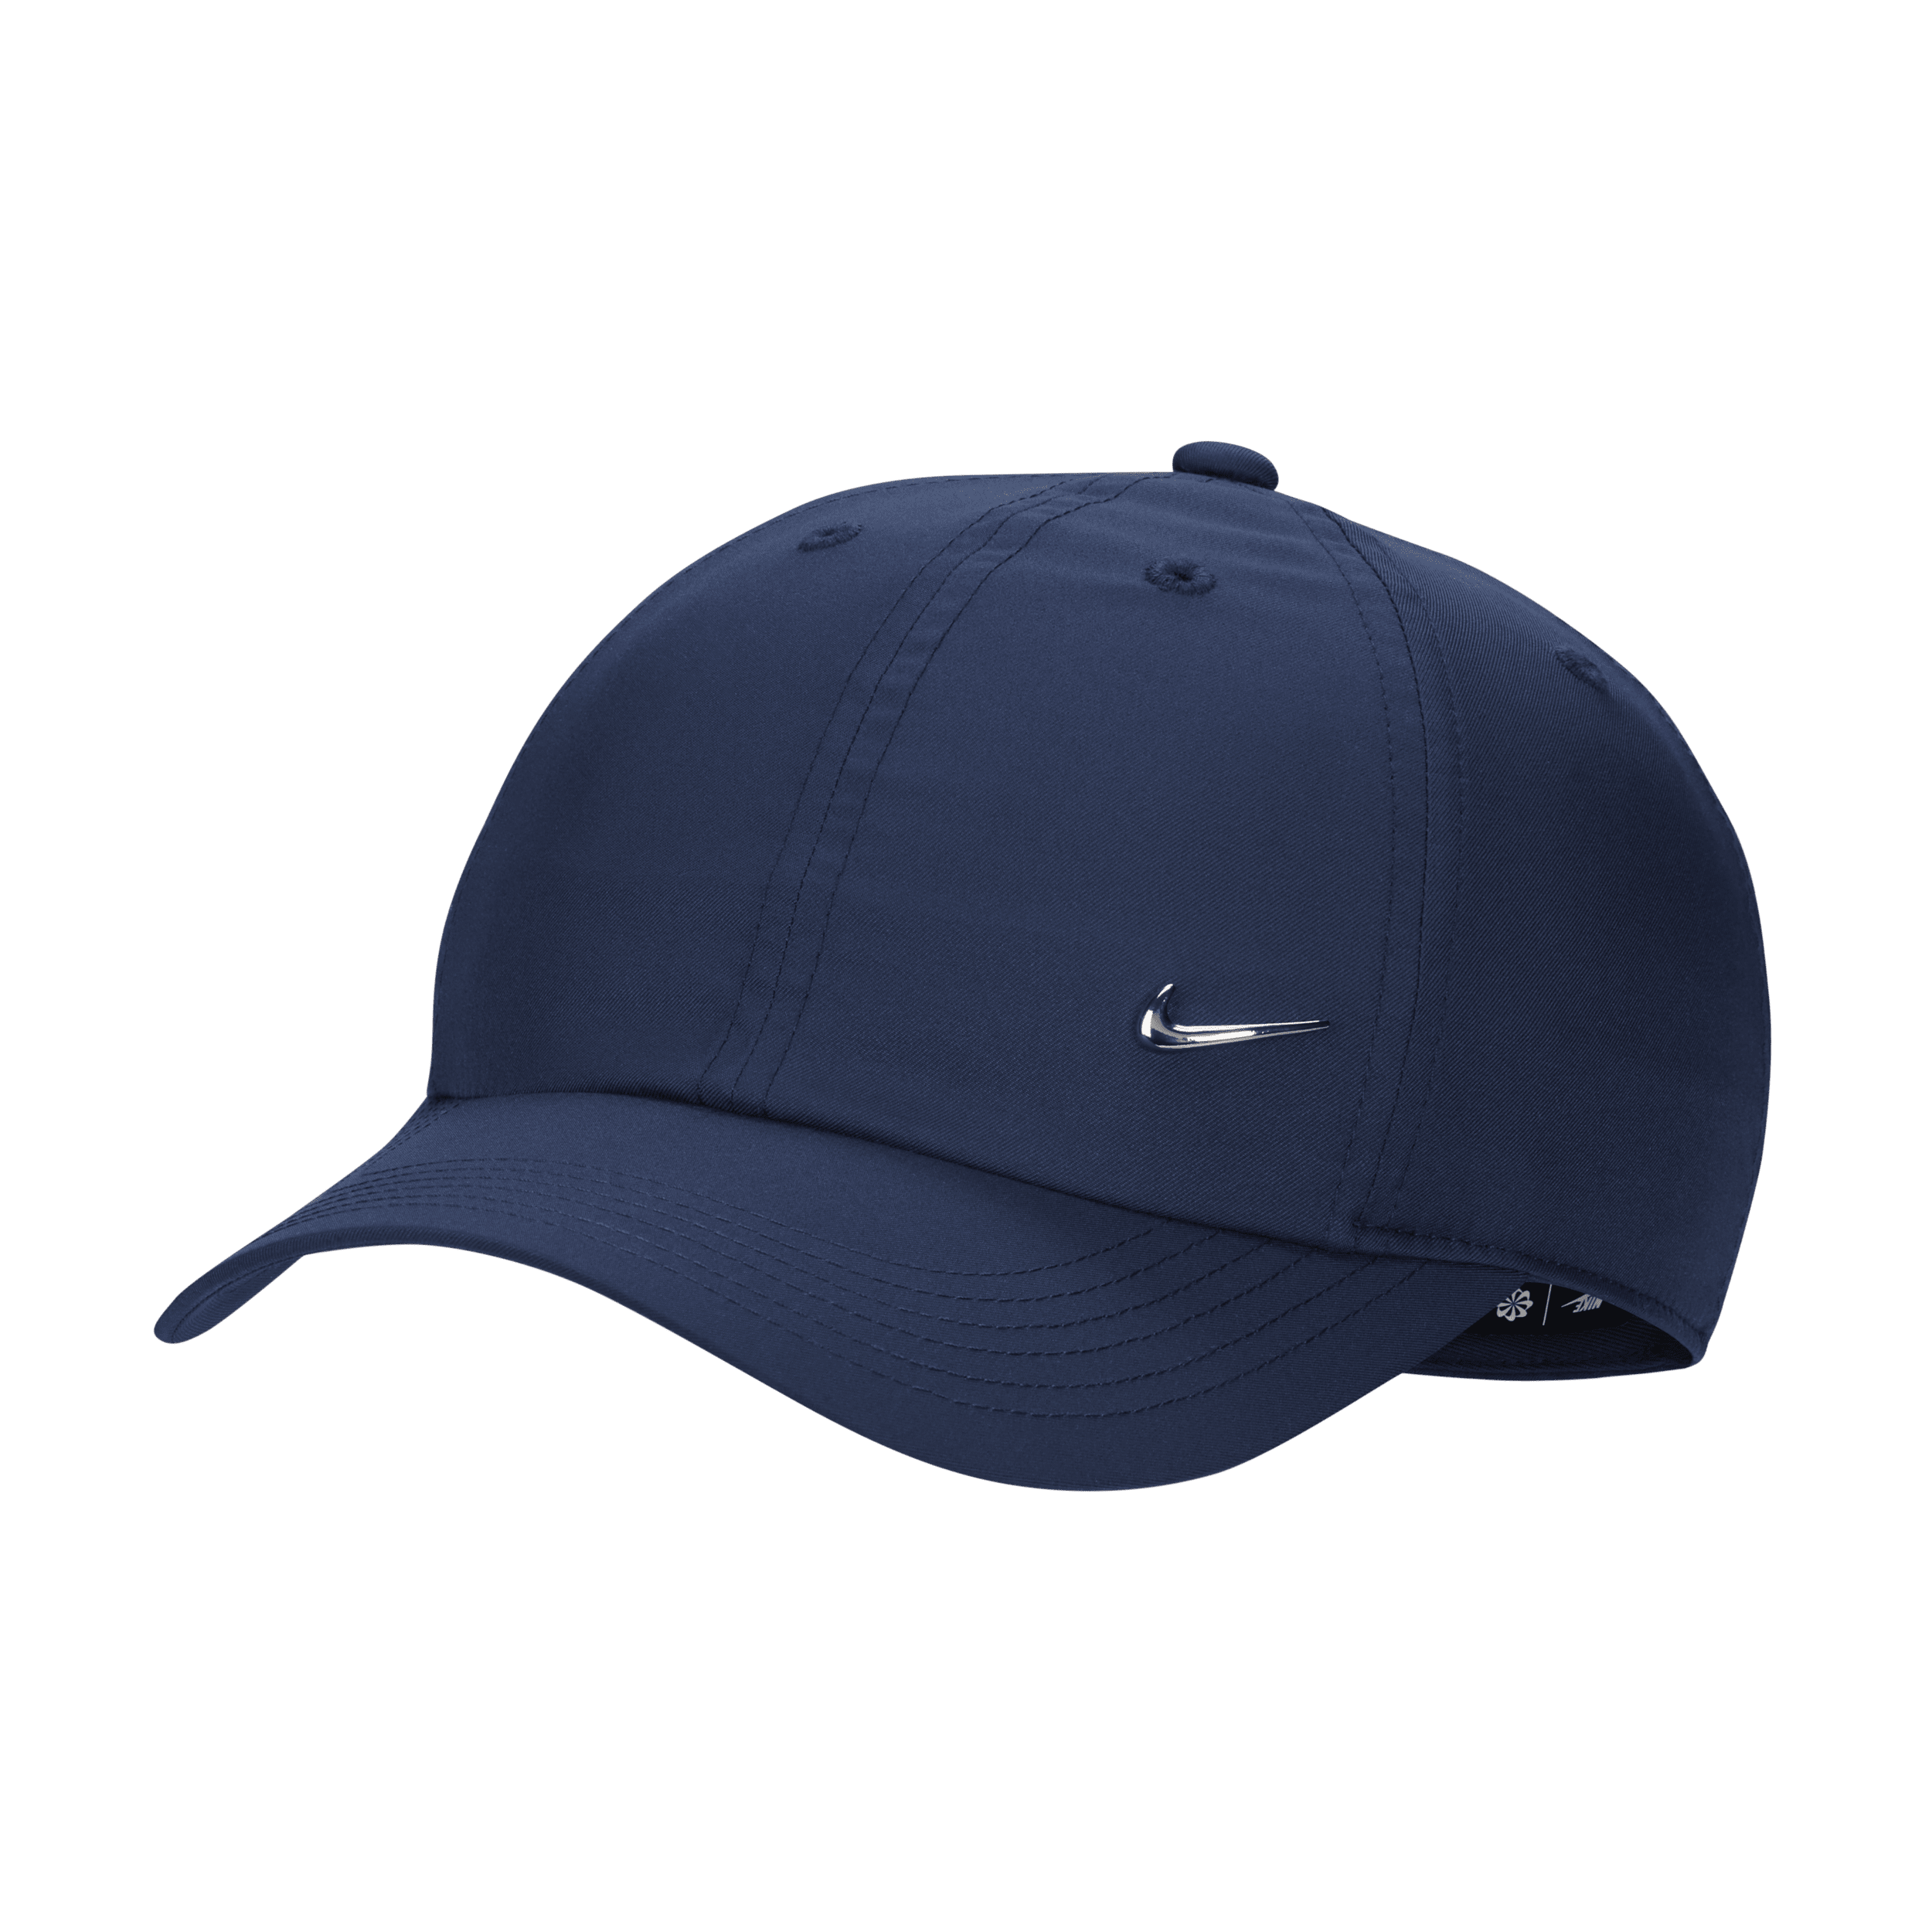 Nike Dri-FIT Club Gorra sin estructura con logotipo Swoosh metálico - Niño/a - Azul